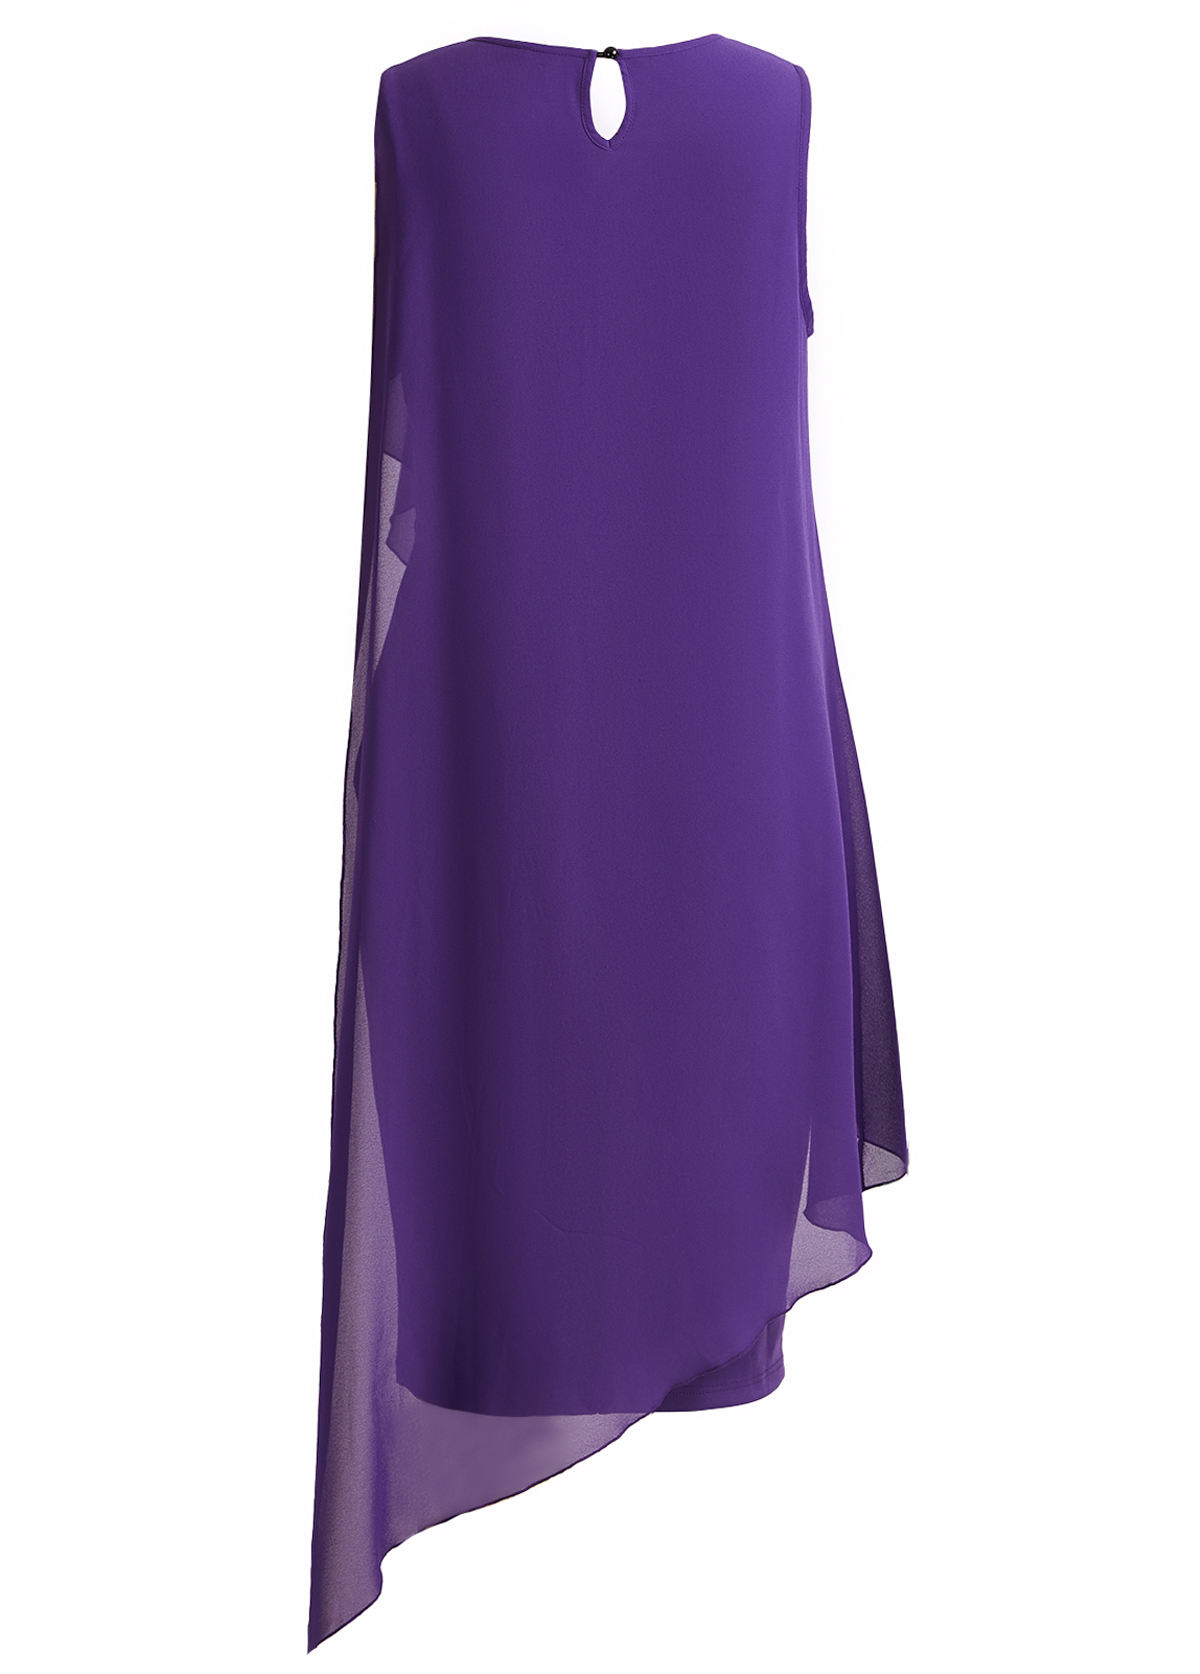 Patchwork Purple High Low Sleeveless Round Neck Bodycon Dress